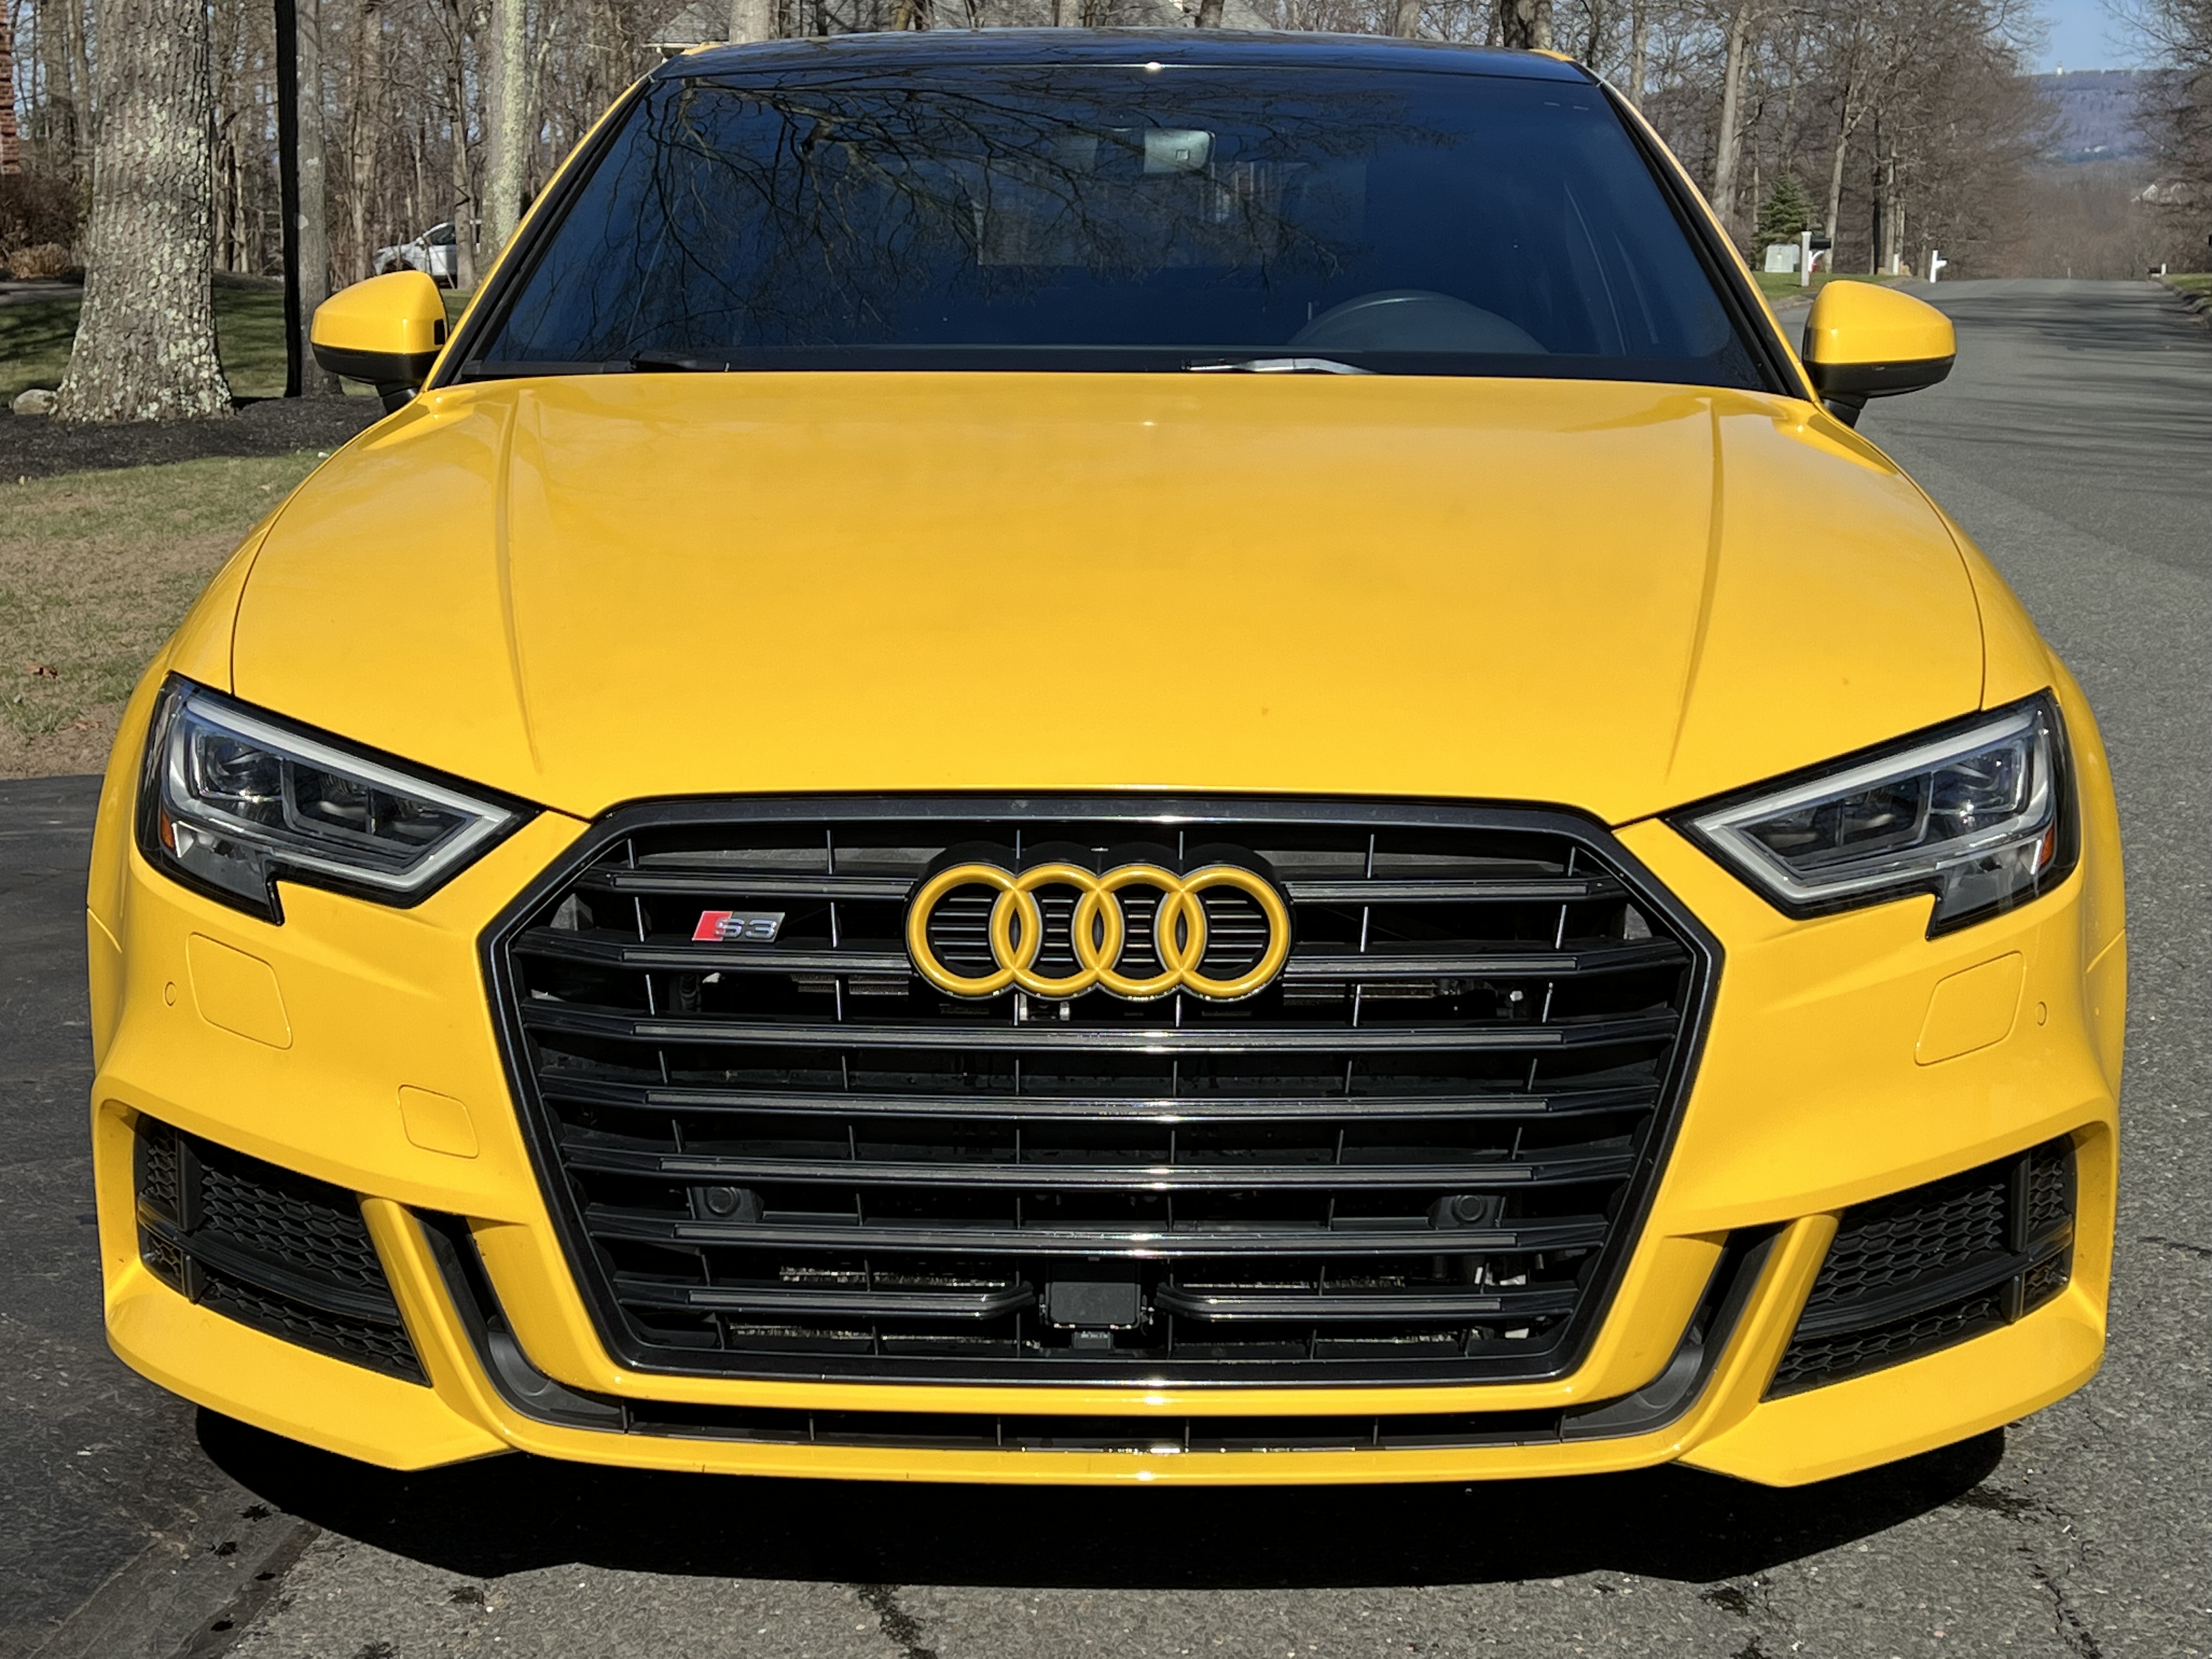 Used 2018 Audi S3 for Sale Near Me | Cars.com